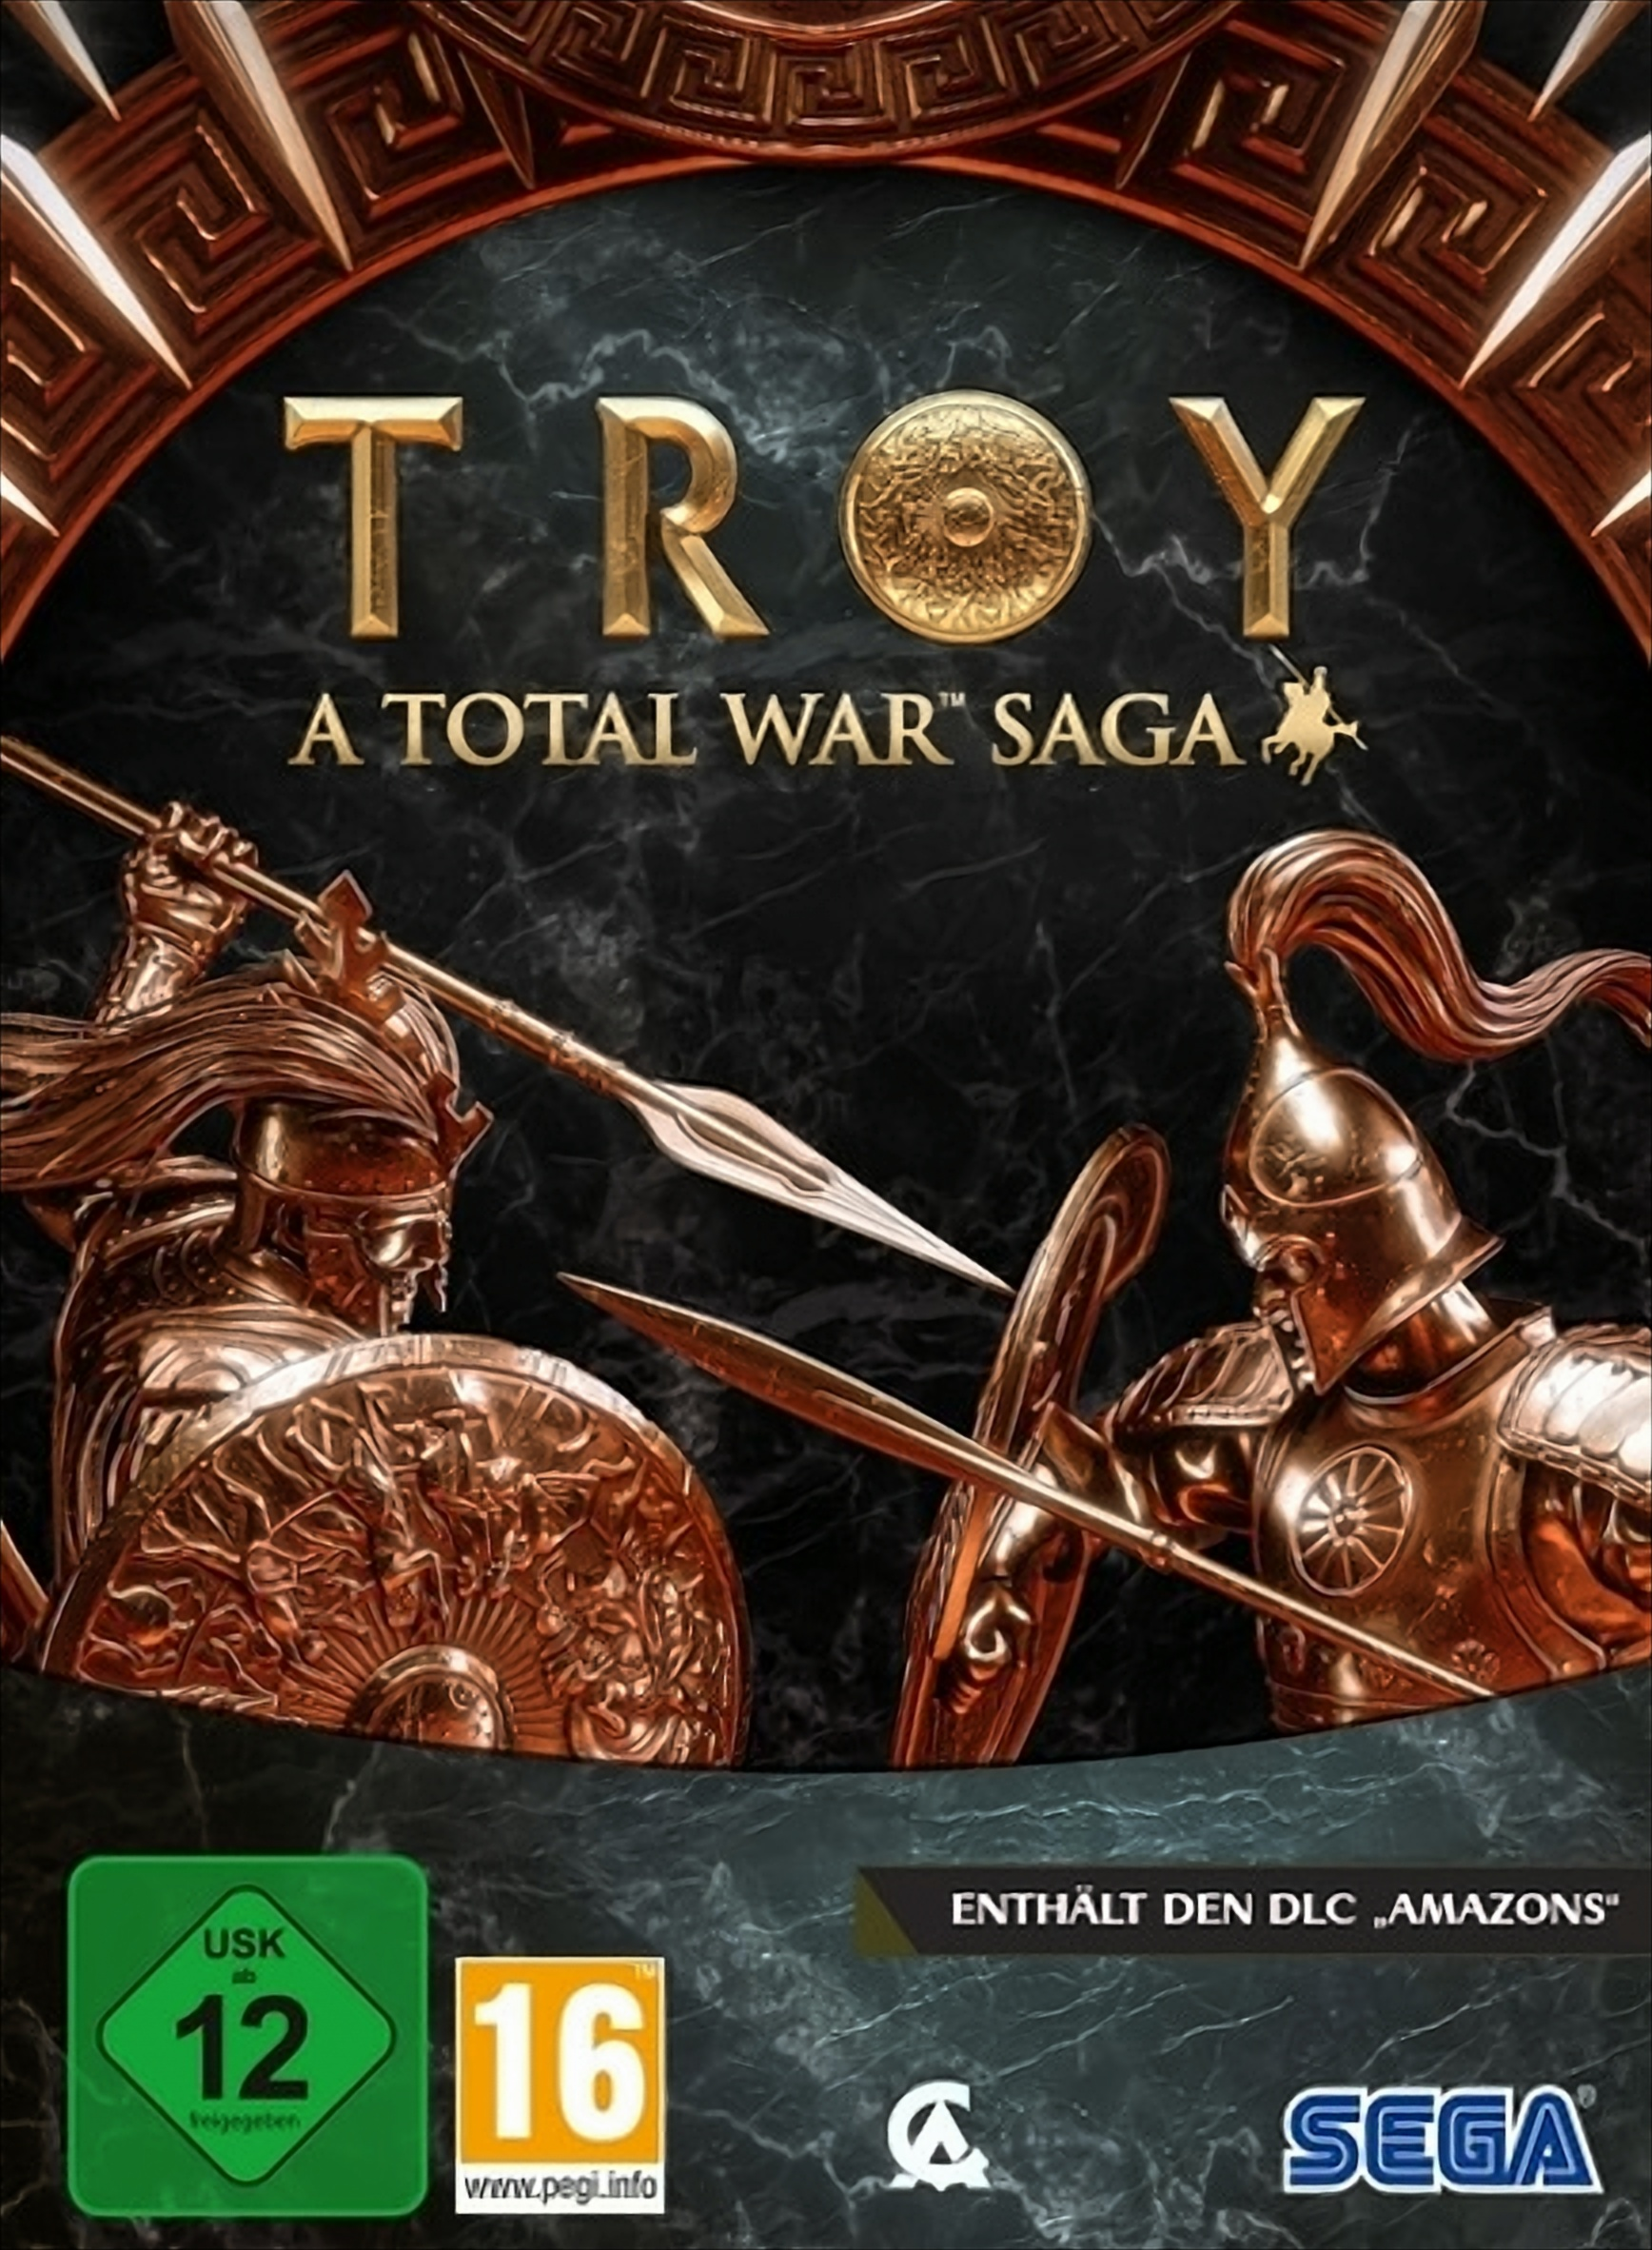 Edition War [PC] Limited - A Total Troy Saga: